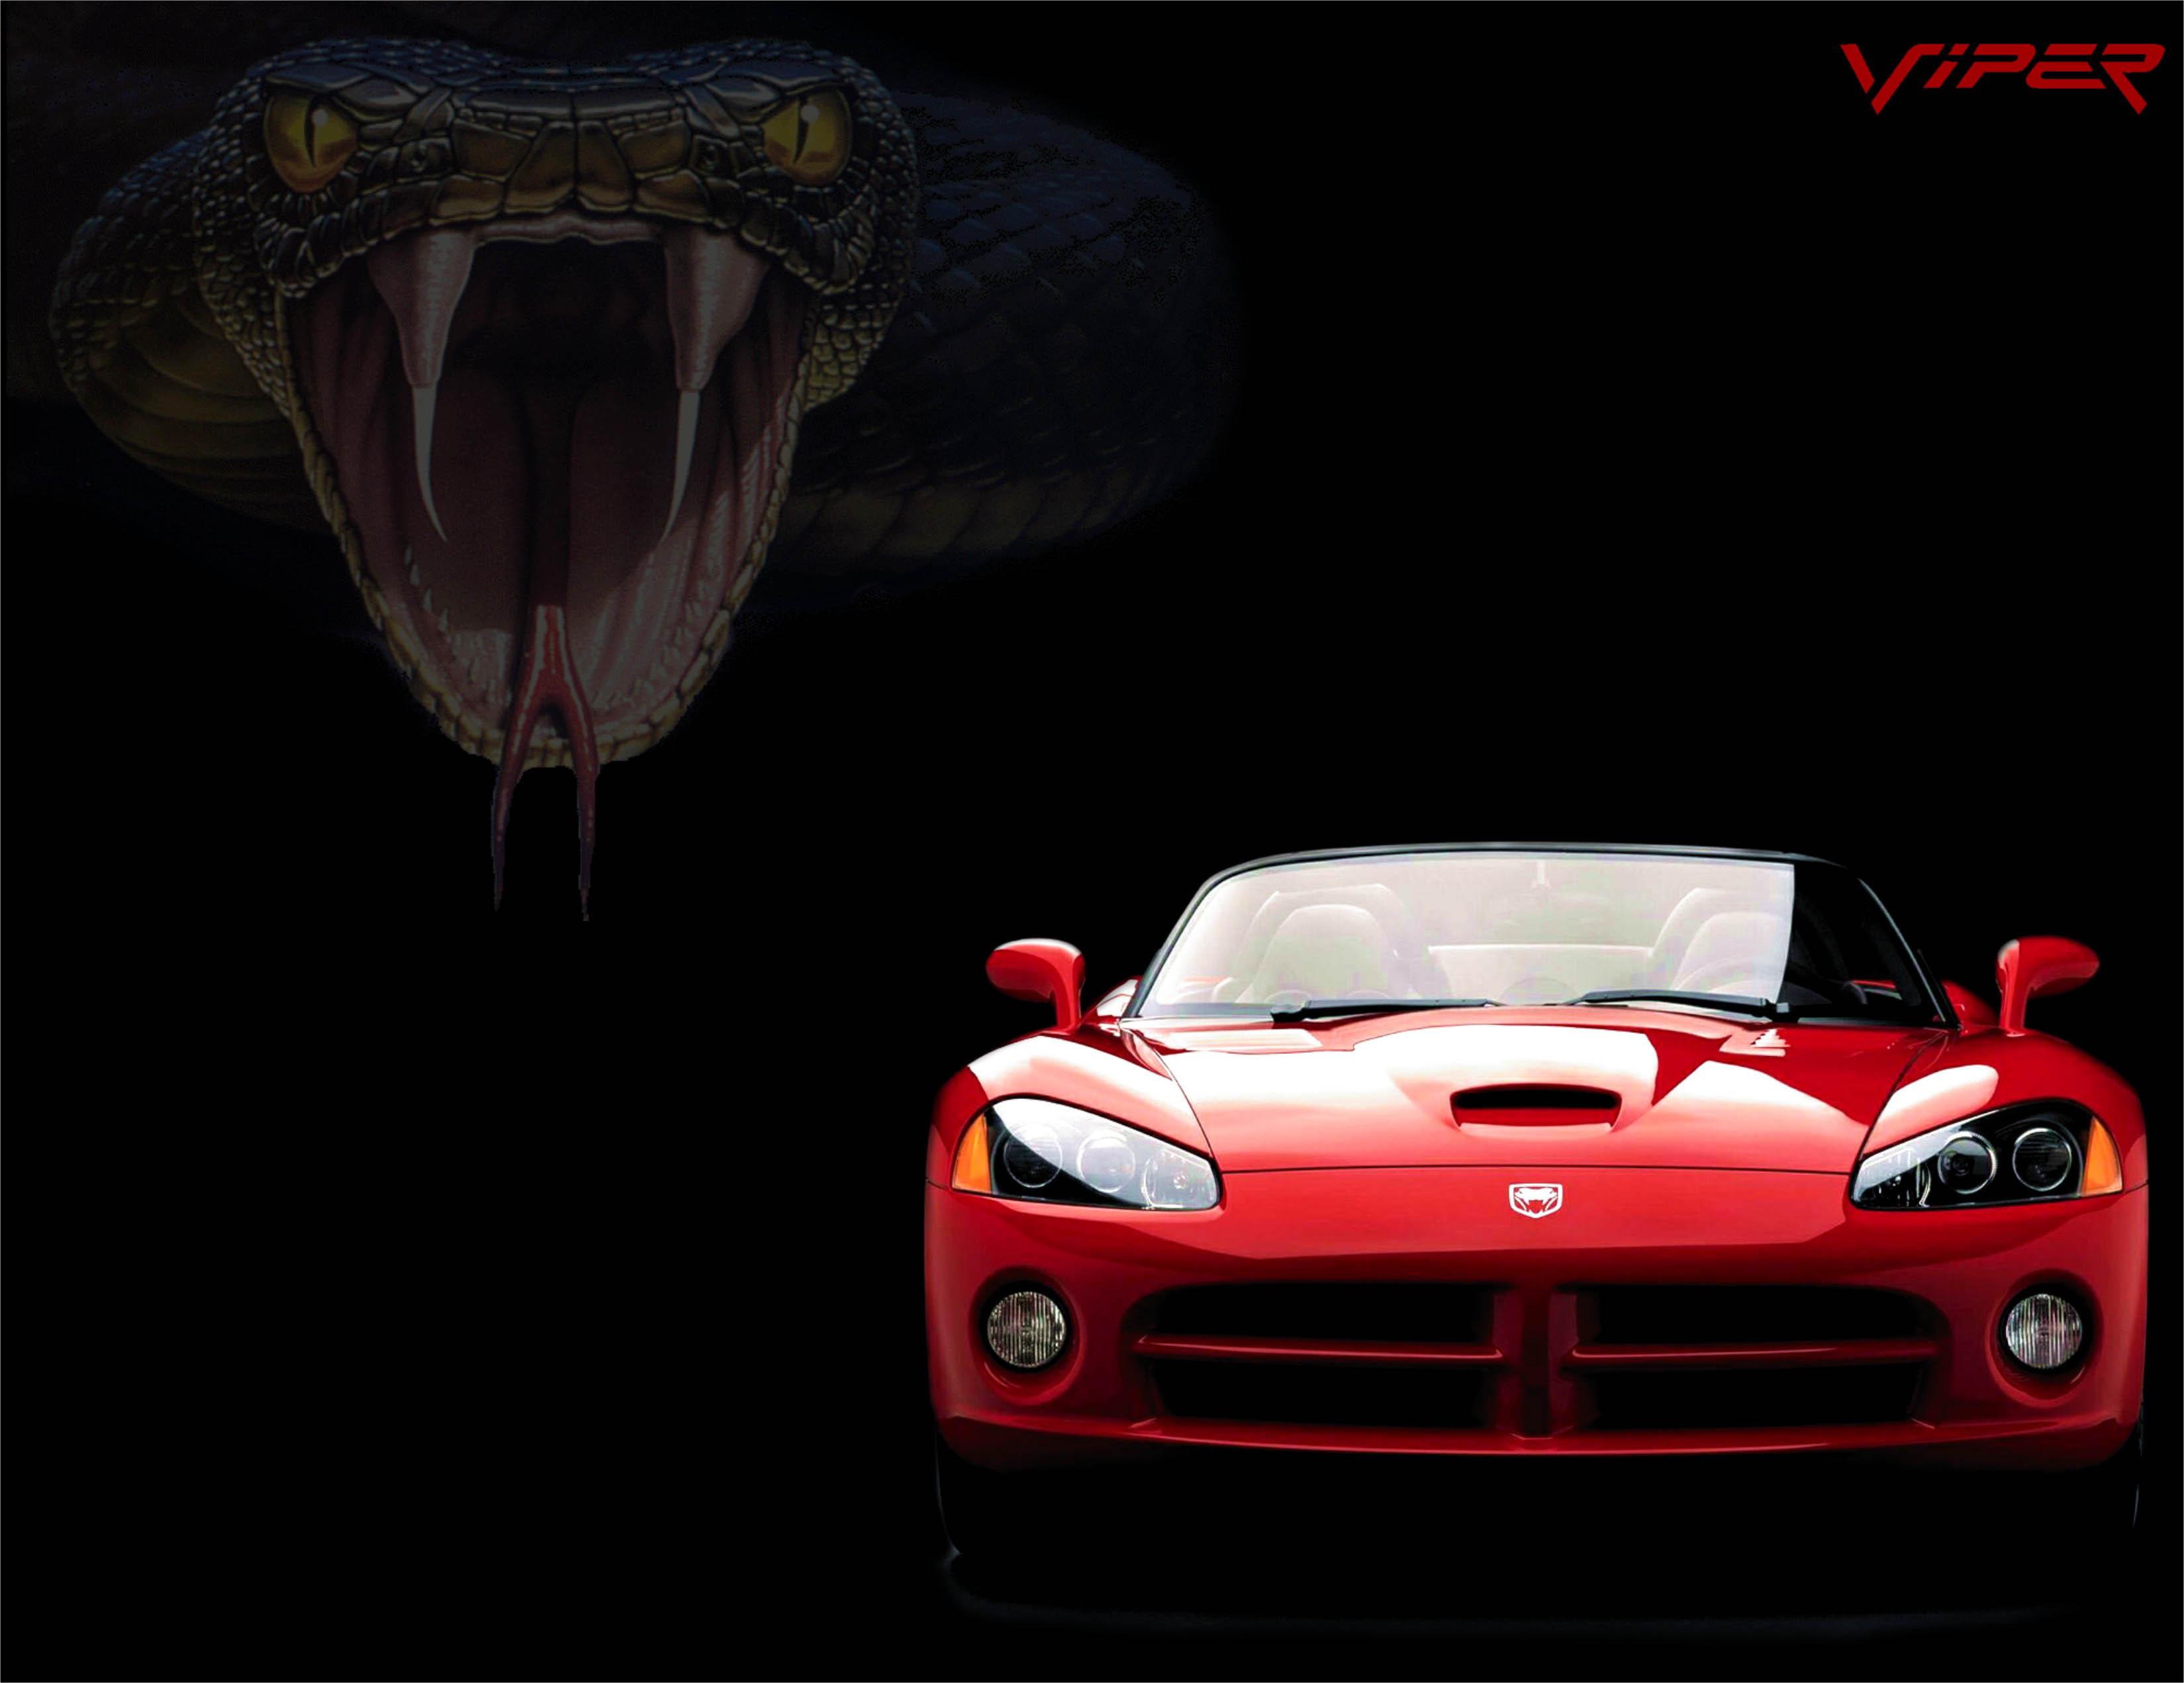 Appealing Red Dodge Viper Super Car Scary Dark Cobra Snake